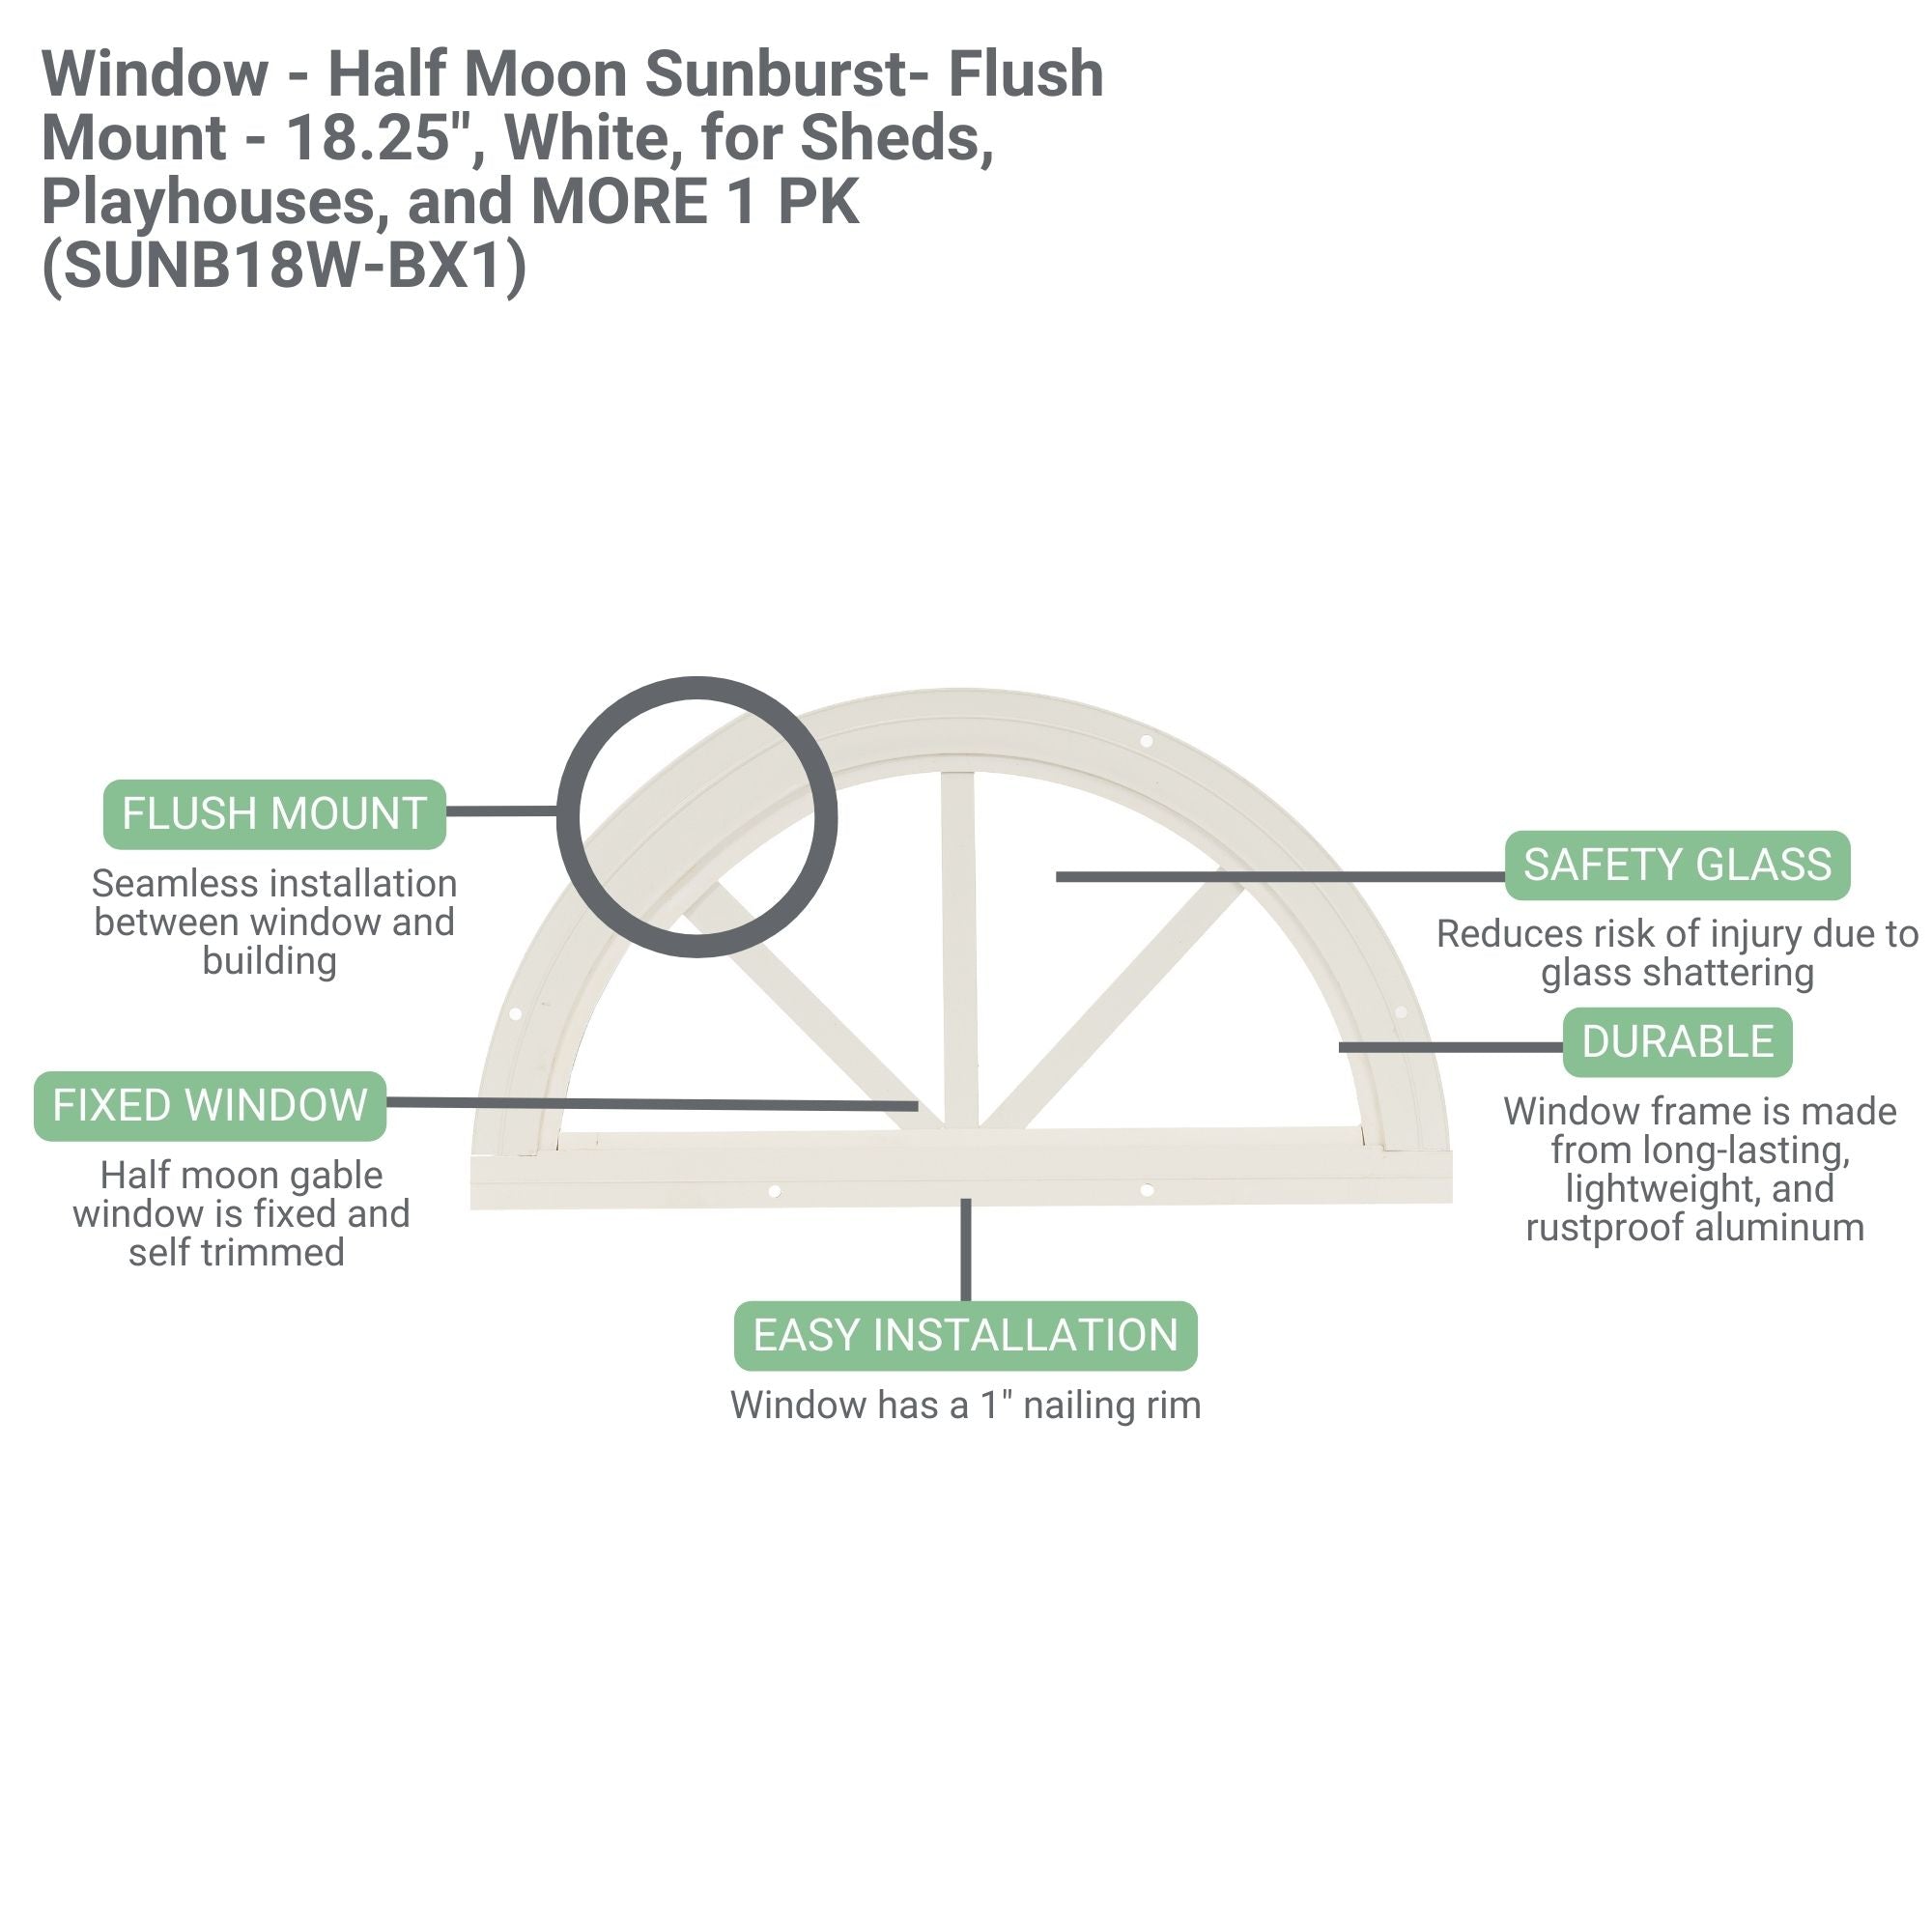 18.25" Half Moon Sunburst Flush Mount Shed Window